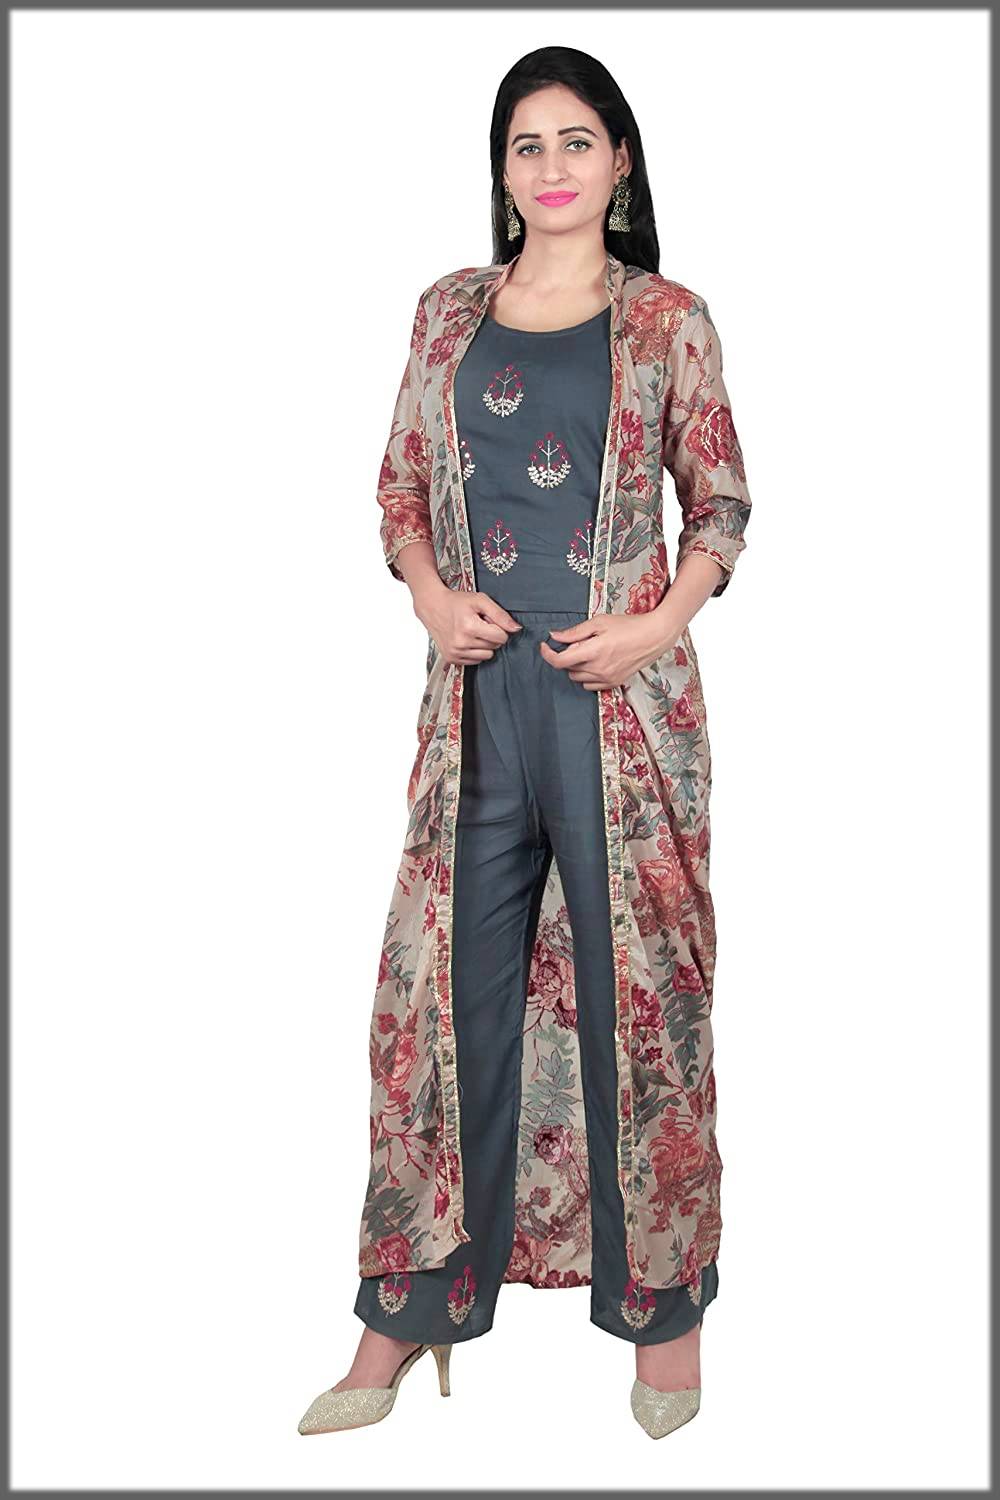 Hardika Rayon Anarkali Dress Long Flared Kurti With Dectachable Jacket and  With Gold Print